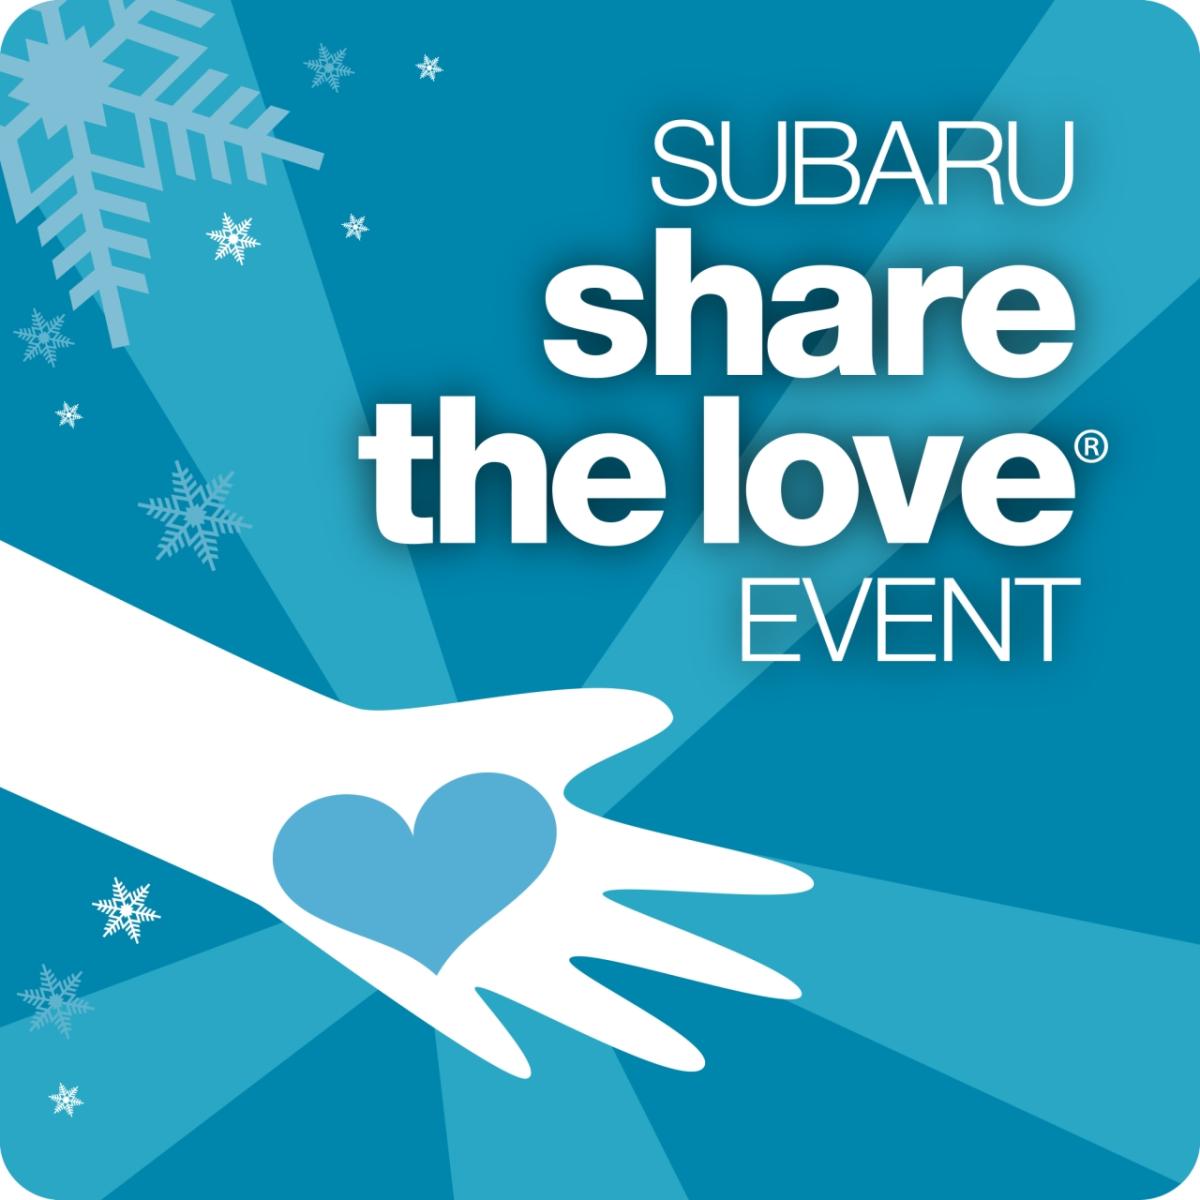 Subaru share the love event logo